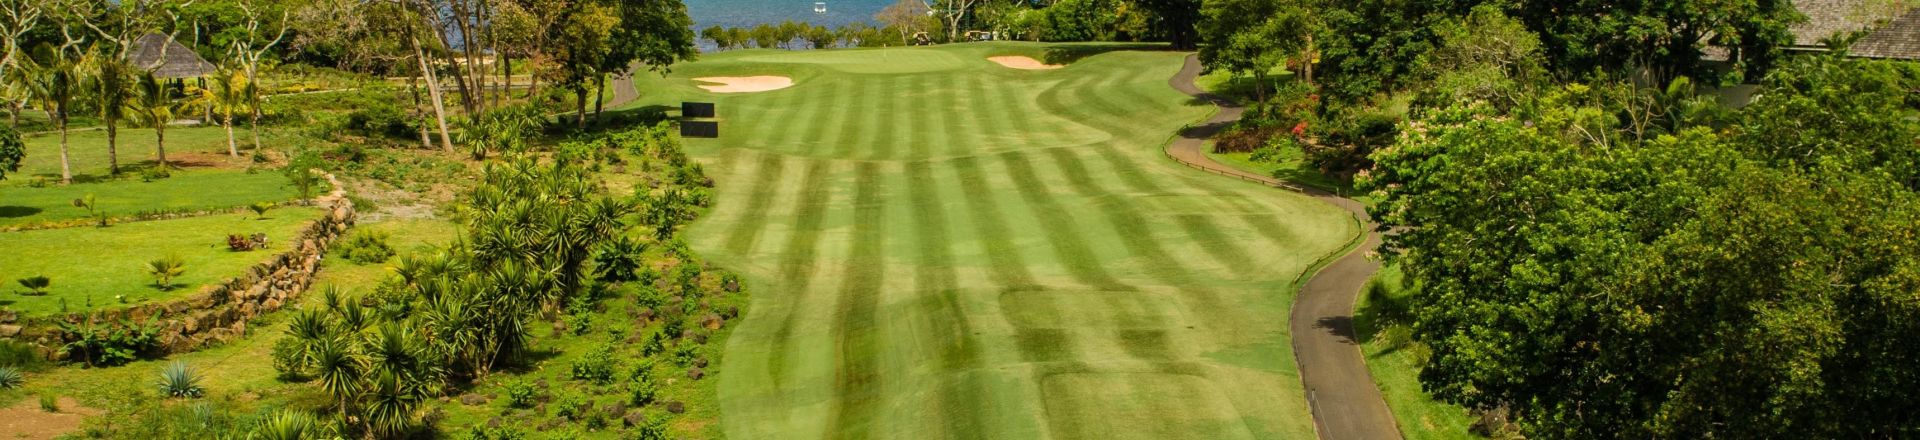 Golf in Mauritius at Anahita Golf Course